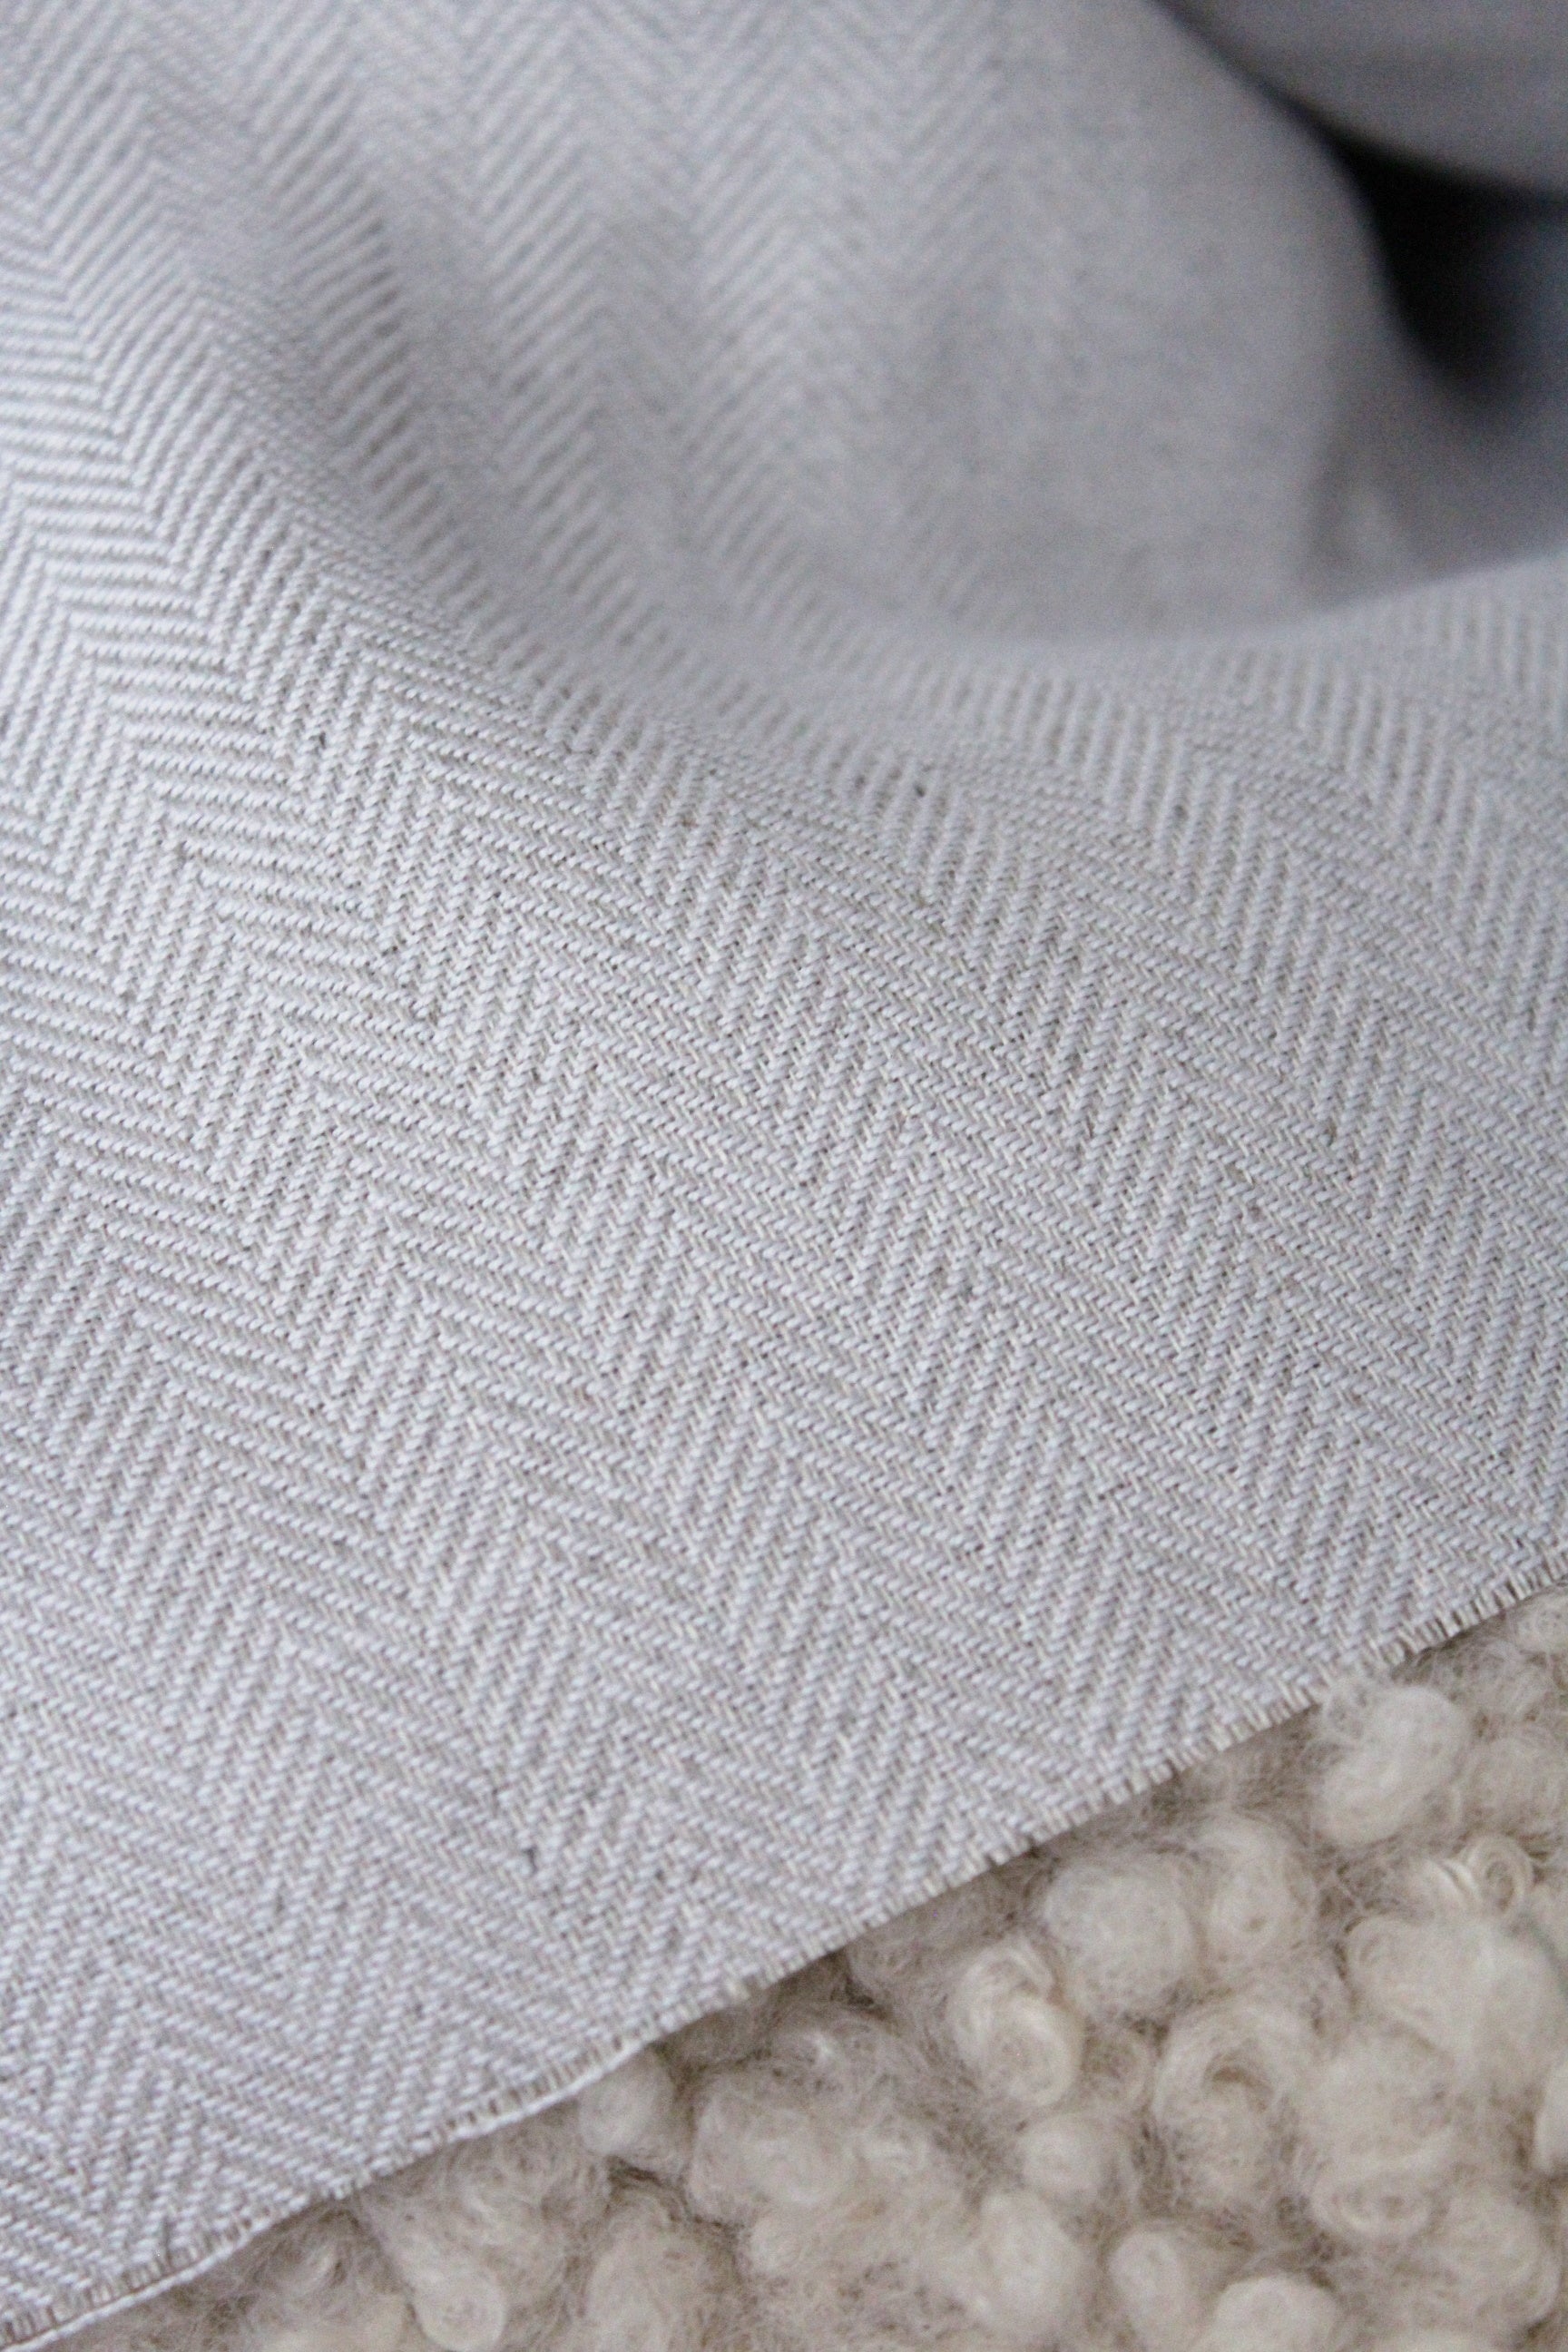 pure natural flax linen, grey with purple undertone, herringbone weave texture, medium weight fabric